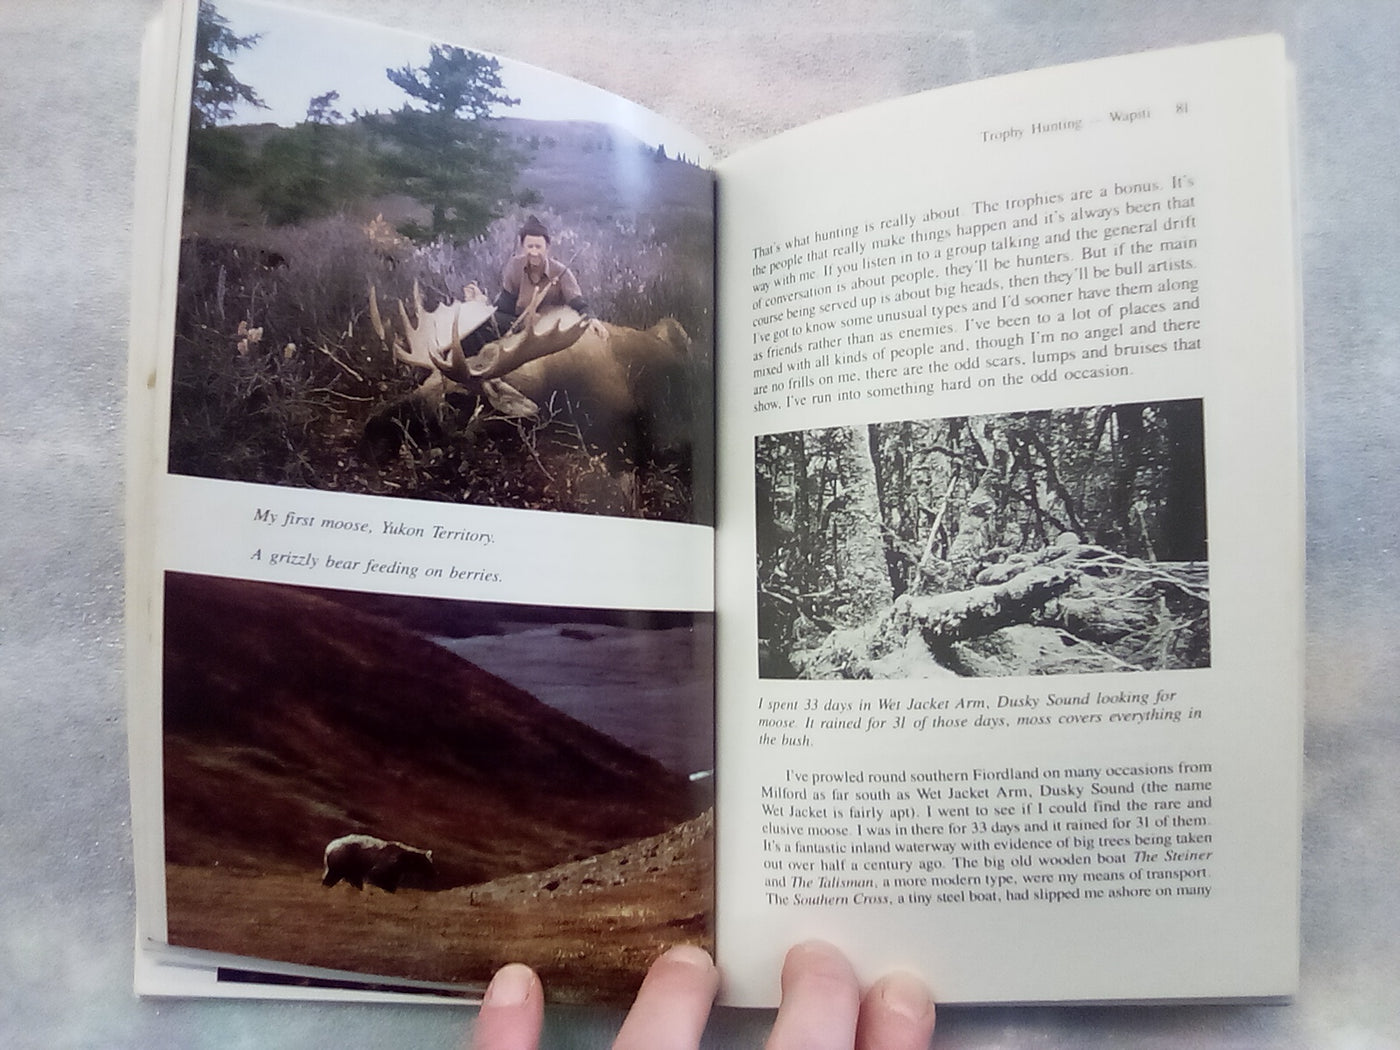 My Deer Life by Harry Bimler (Signed copy)